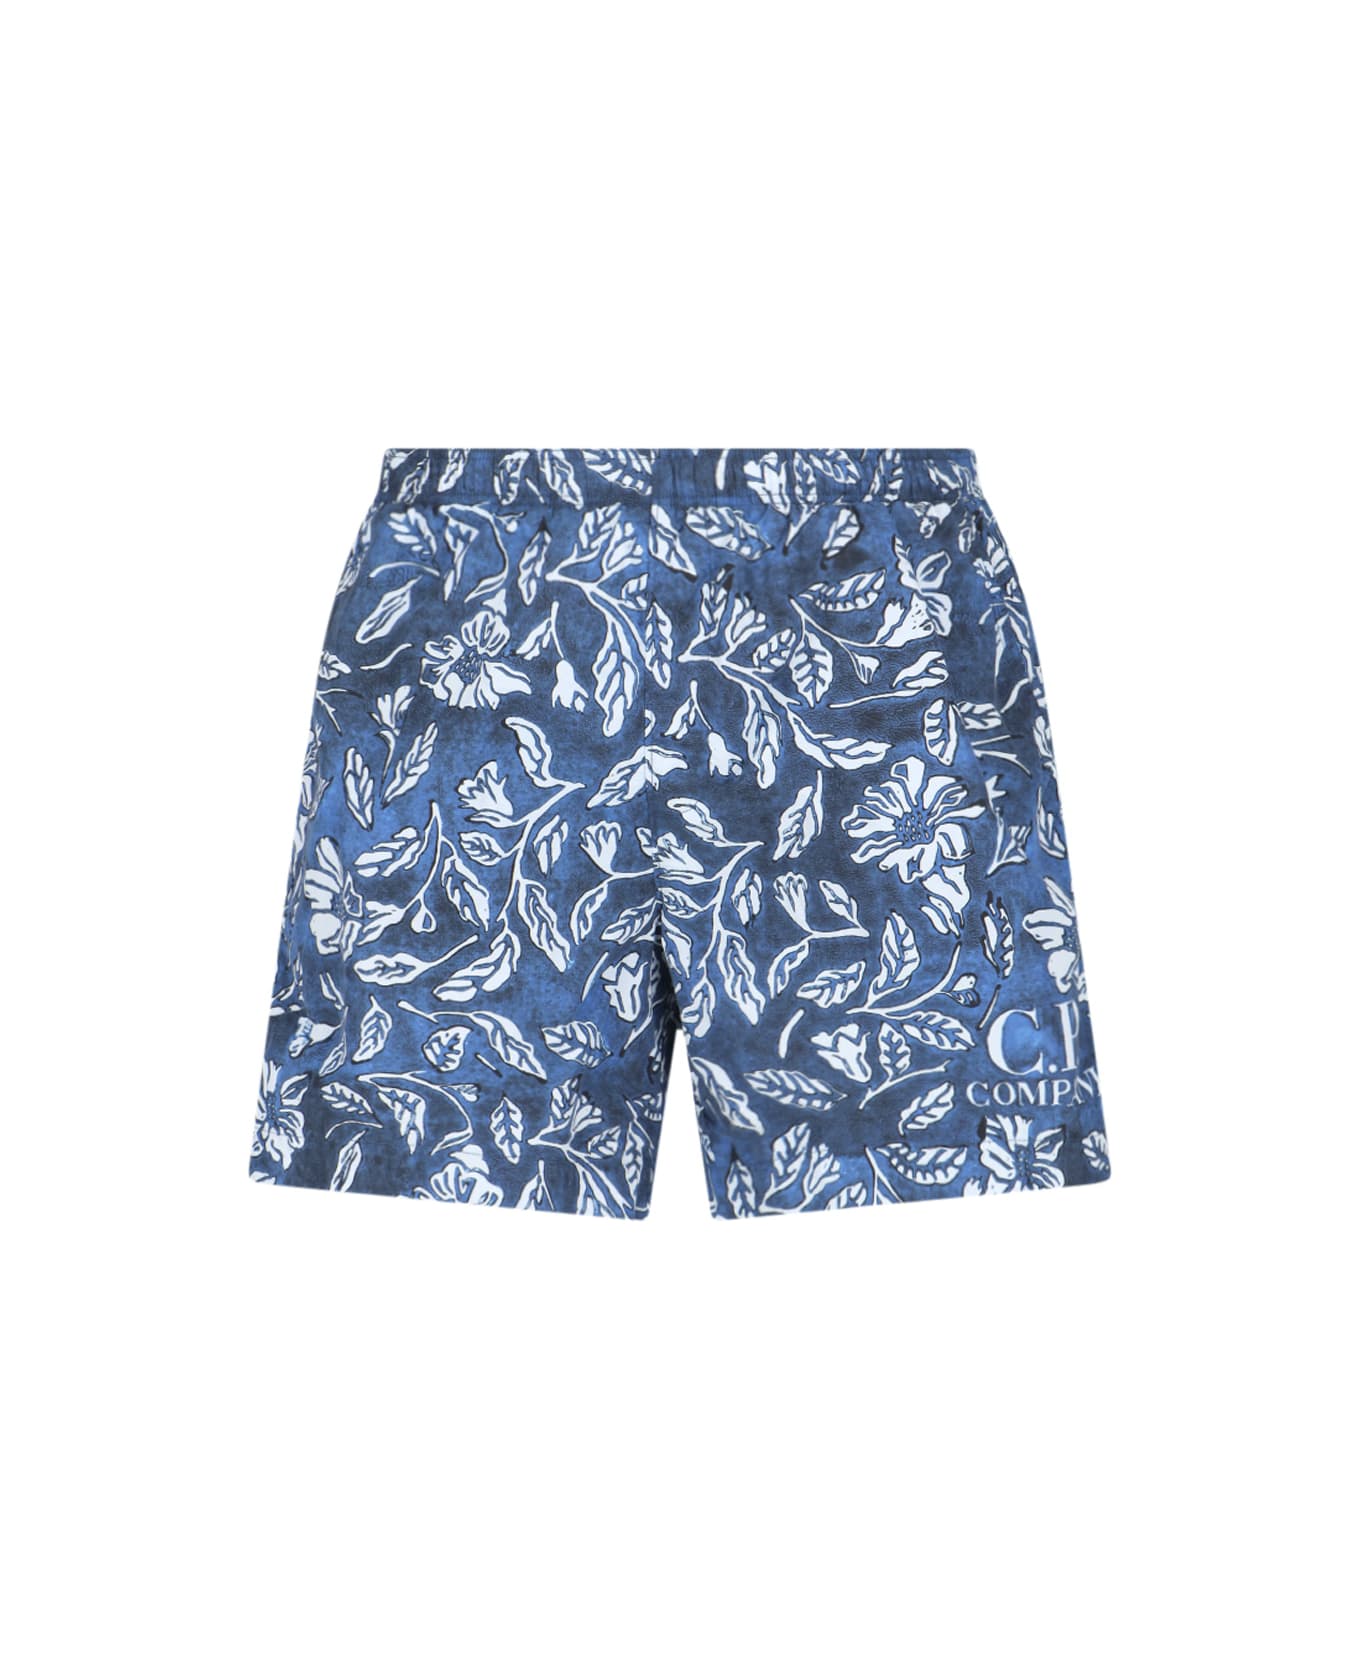 C.P. Company Floral Print Swimming Shorts - Medieval Blue スイムトランクス